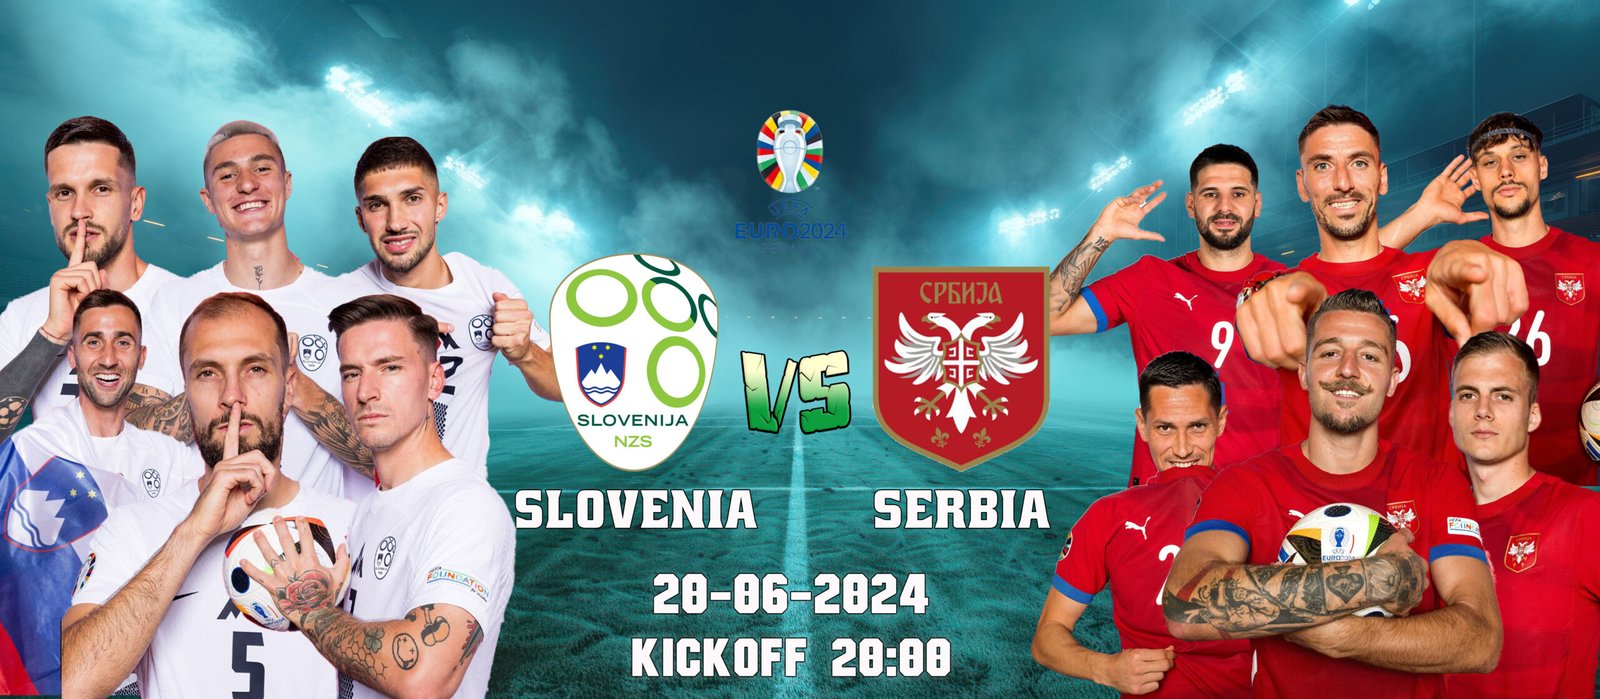 Slovenia VS Serbia